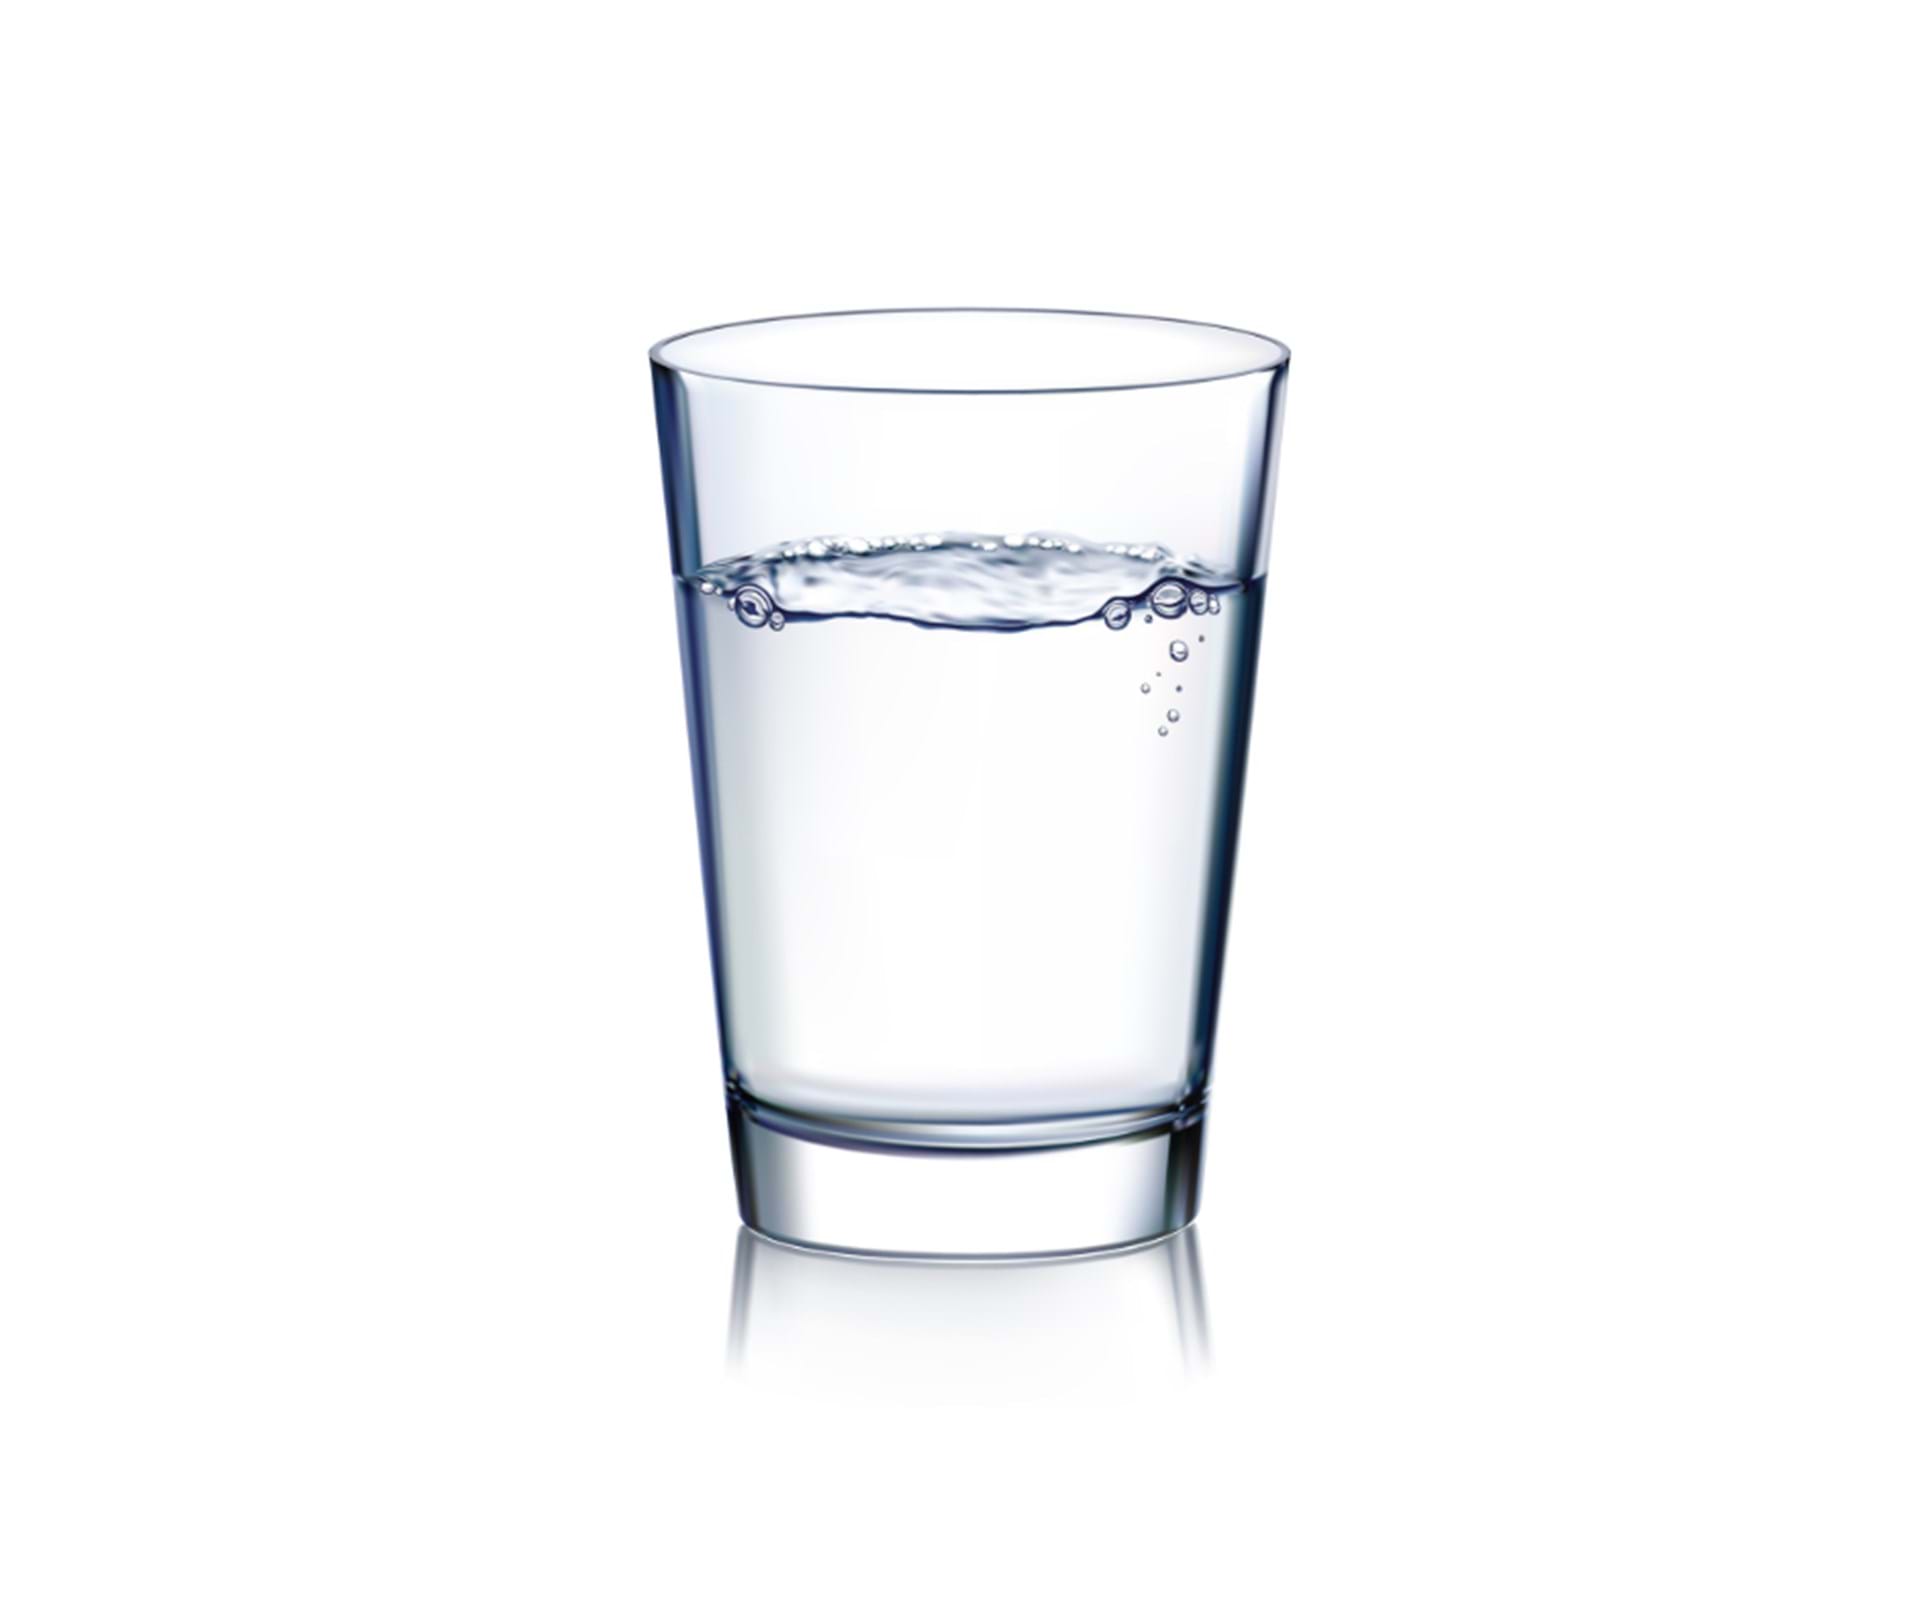 1 water glass : r/notinteresting